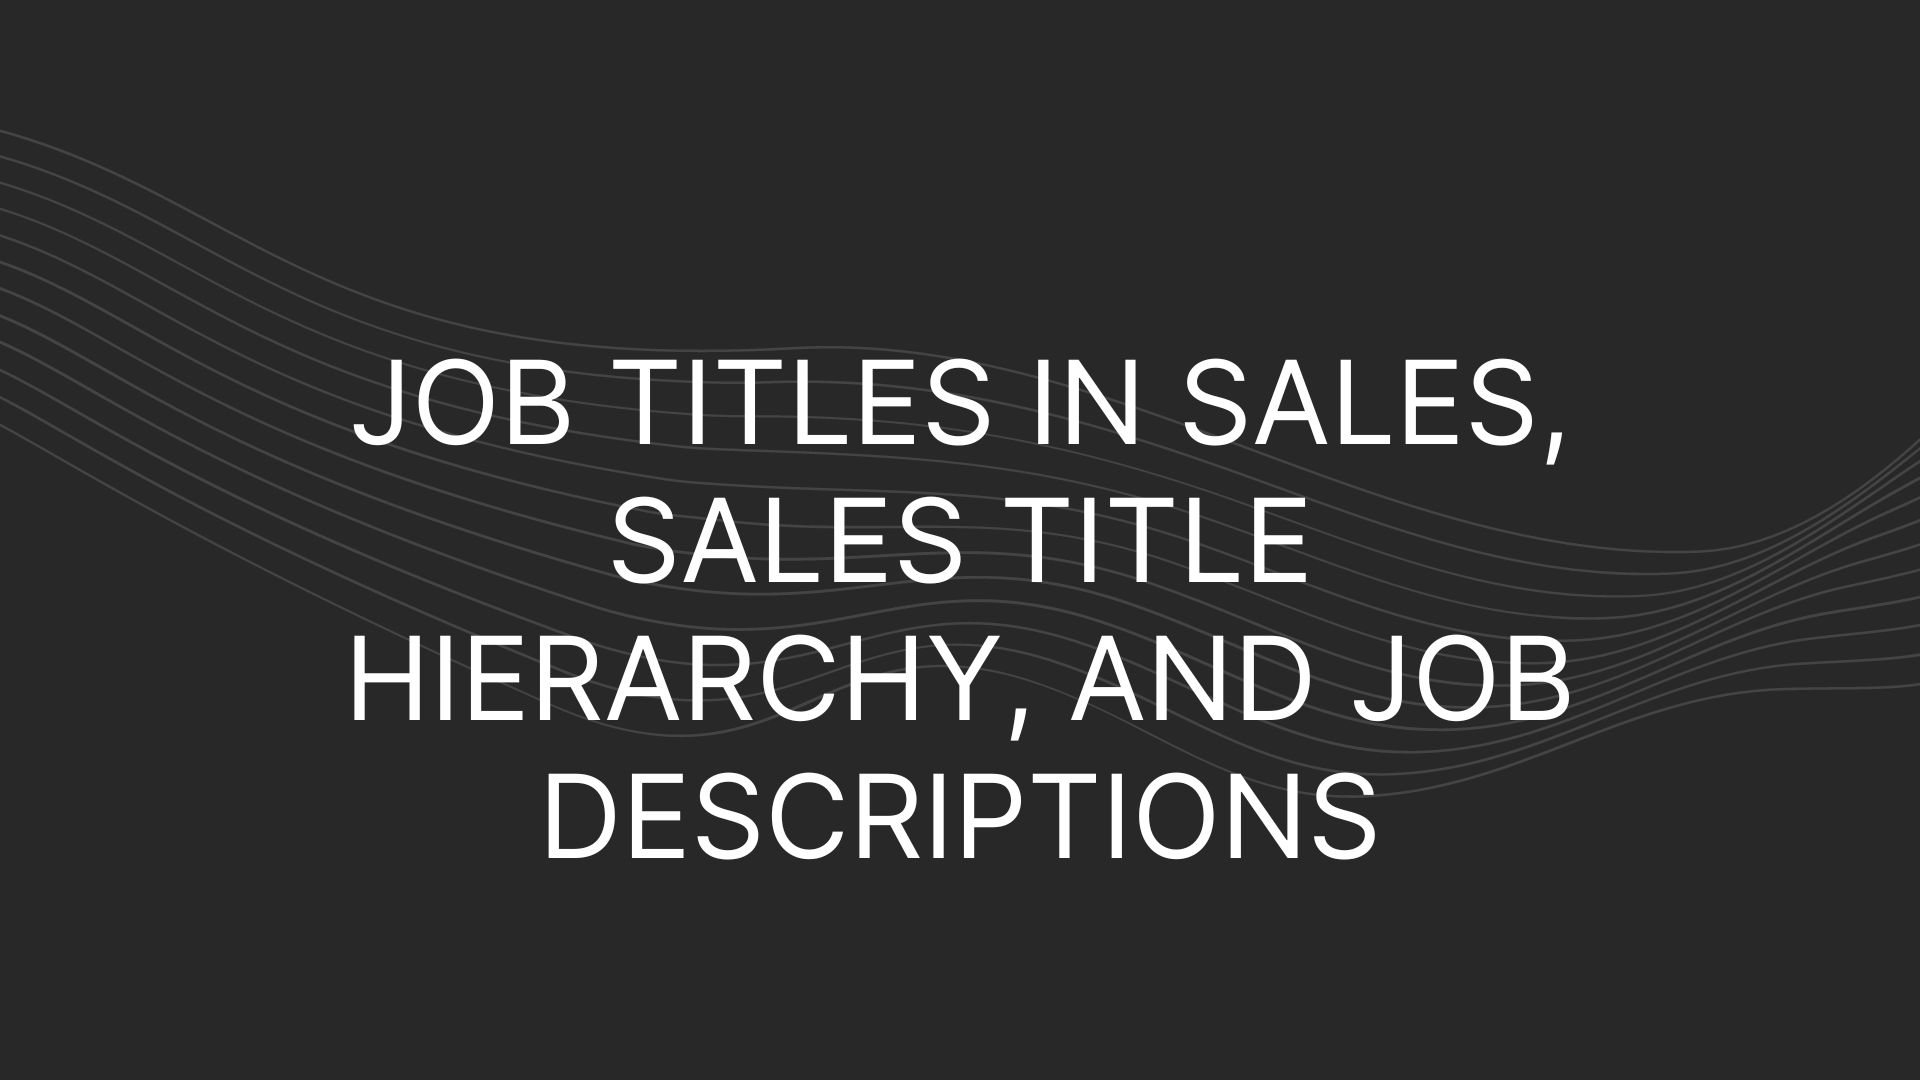 Job Titles in Sales, Sales Title Hierarchy, and Job Descriptions